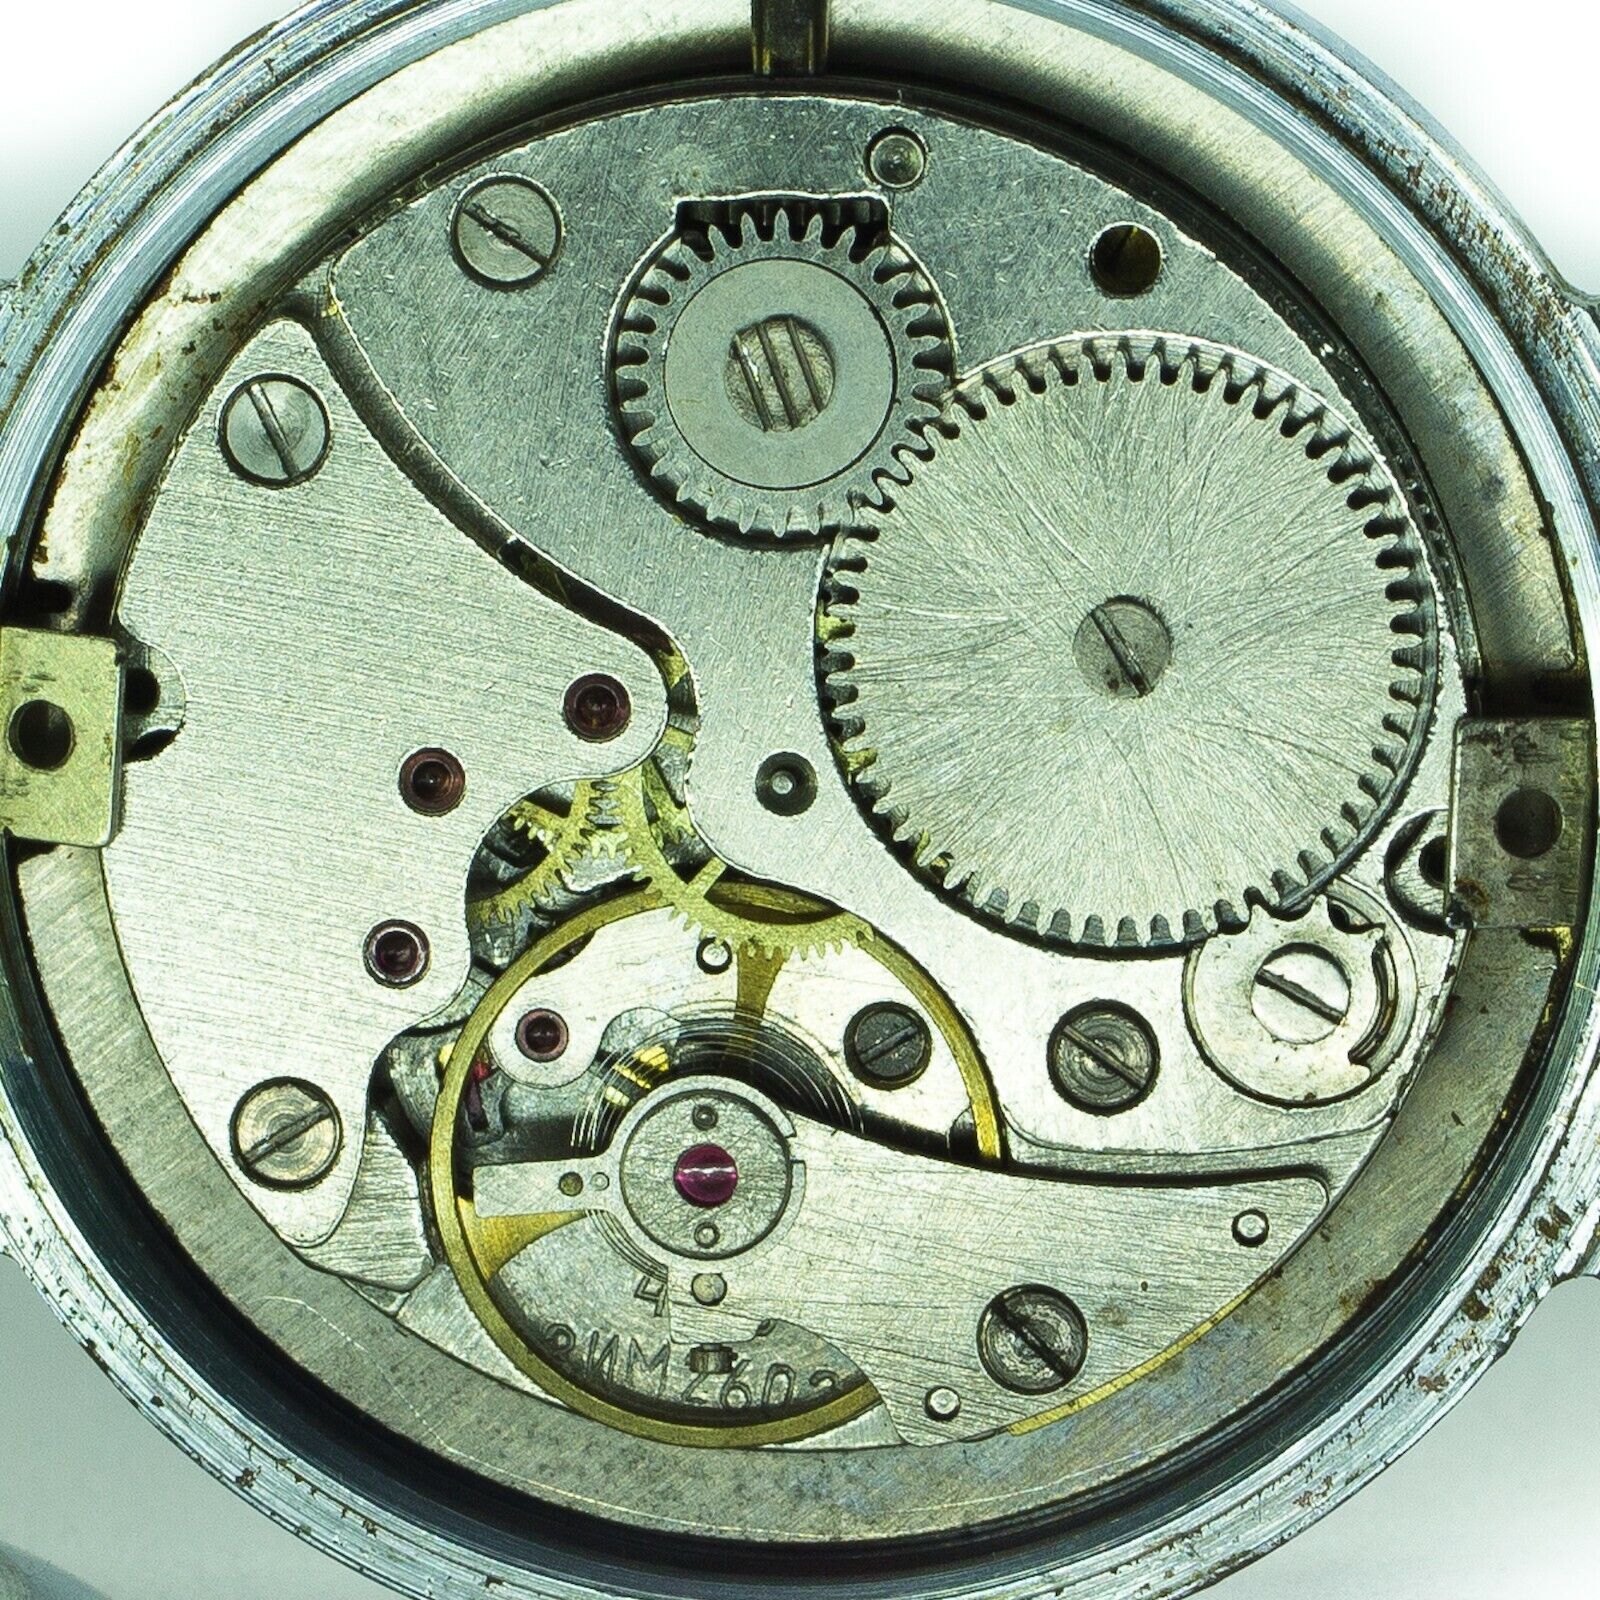 Pobeda Soviet Mechanical Men's Russian Wristwatches Classic Vintage  Watch Krajowe super mile widziane